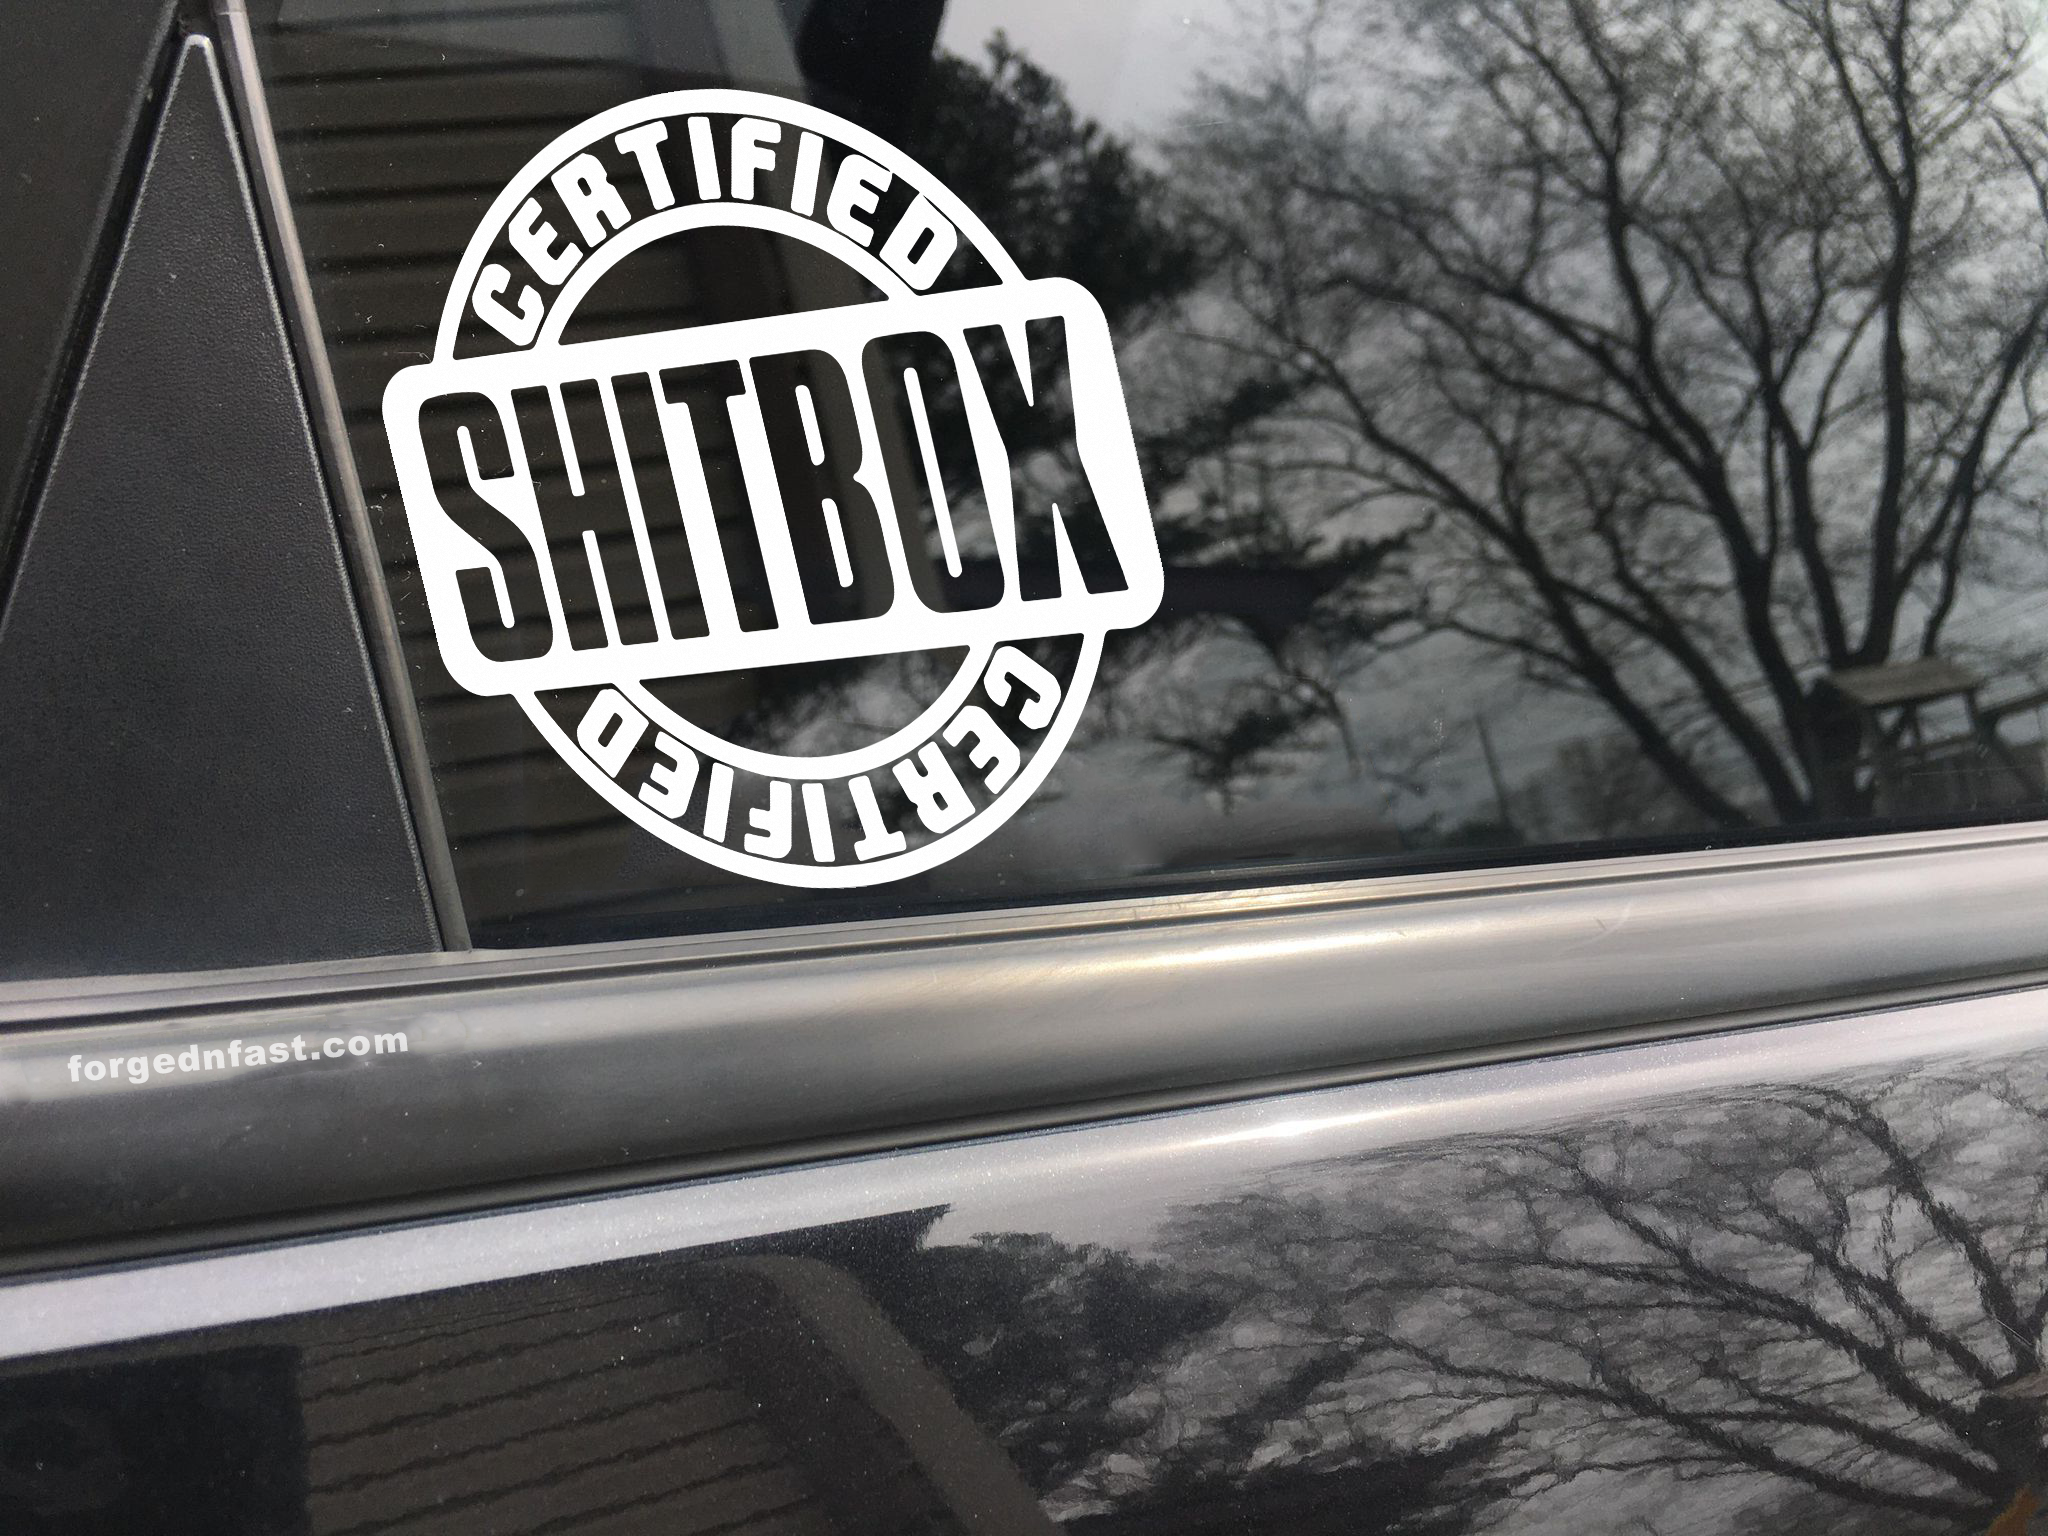 Certified shitbox under construction pos truck van Sticker Vinyl Car Decal 